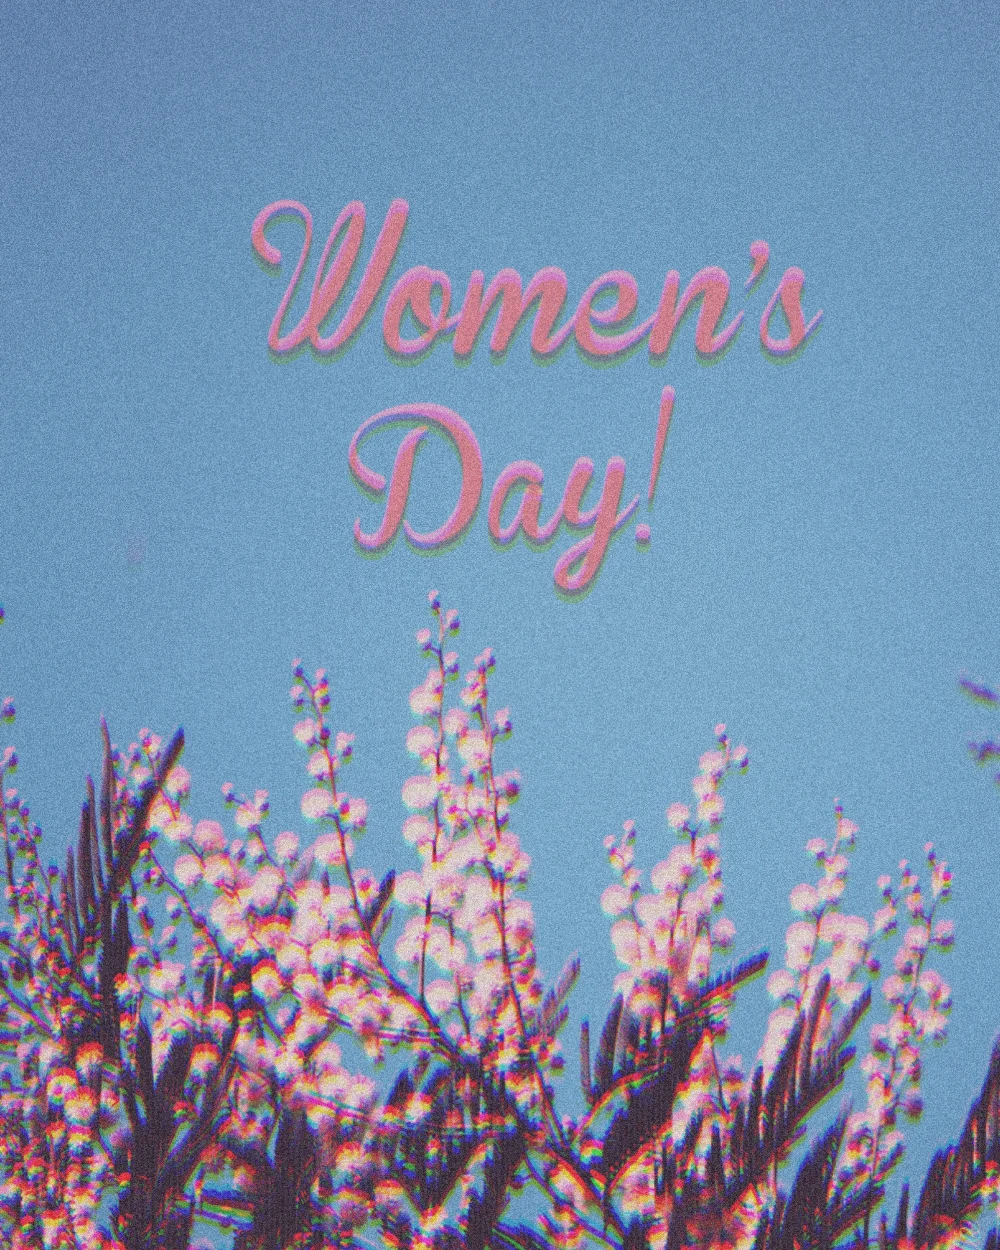 happy women's day!! 🌹💝
#womensday